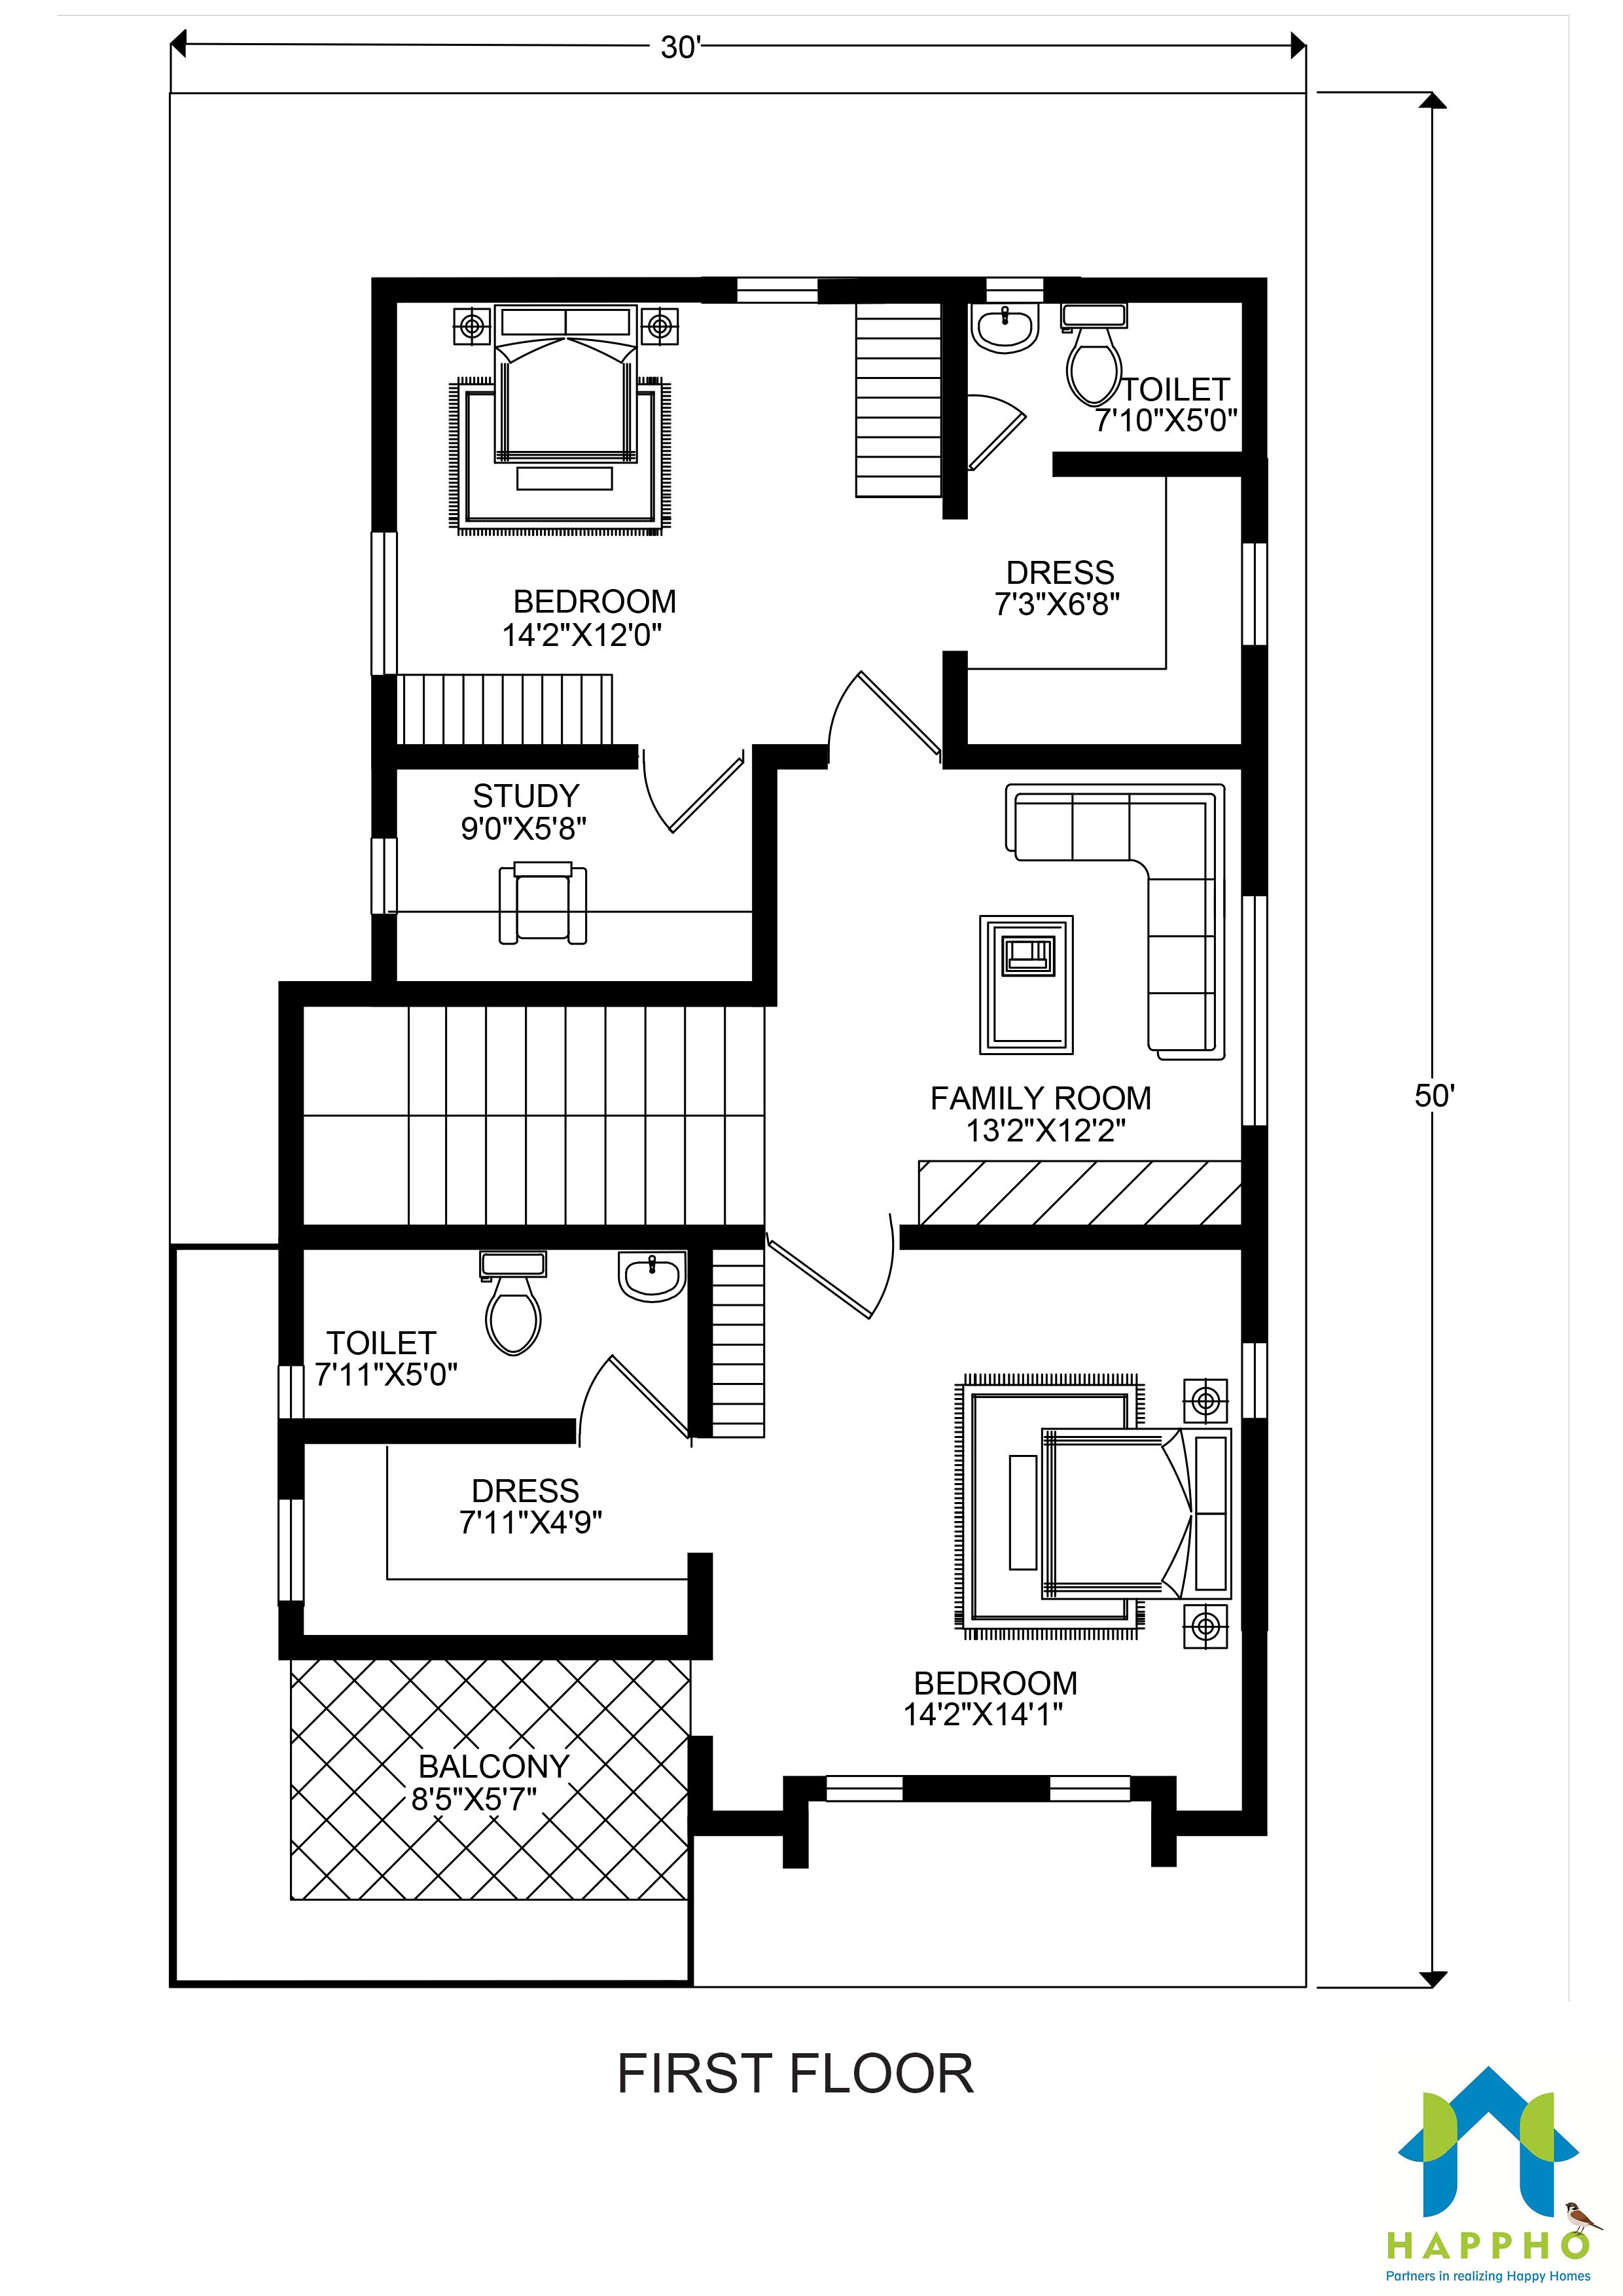 Duplex Floor Plan for 30X50 feet Plot 3BHK (1500 Sq.ft